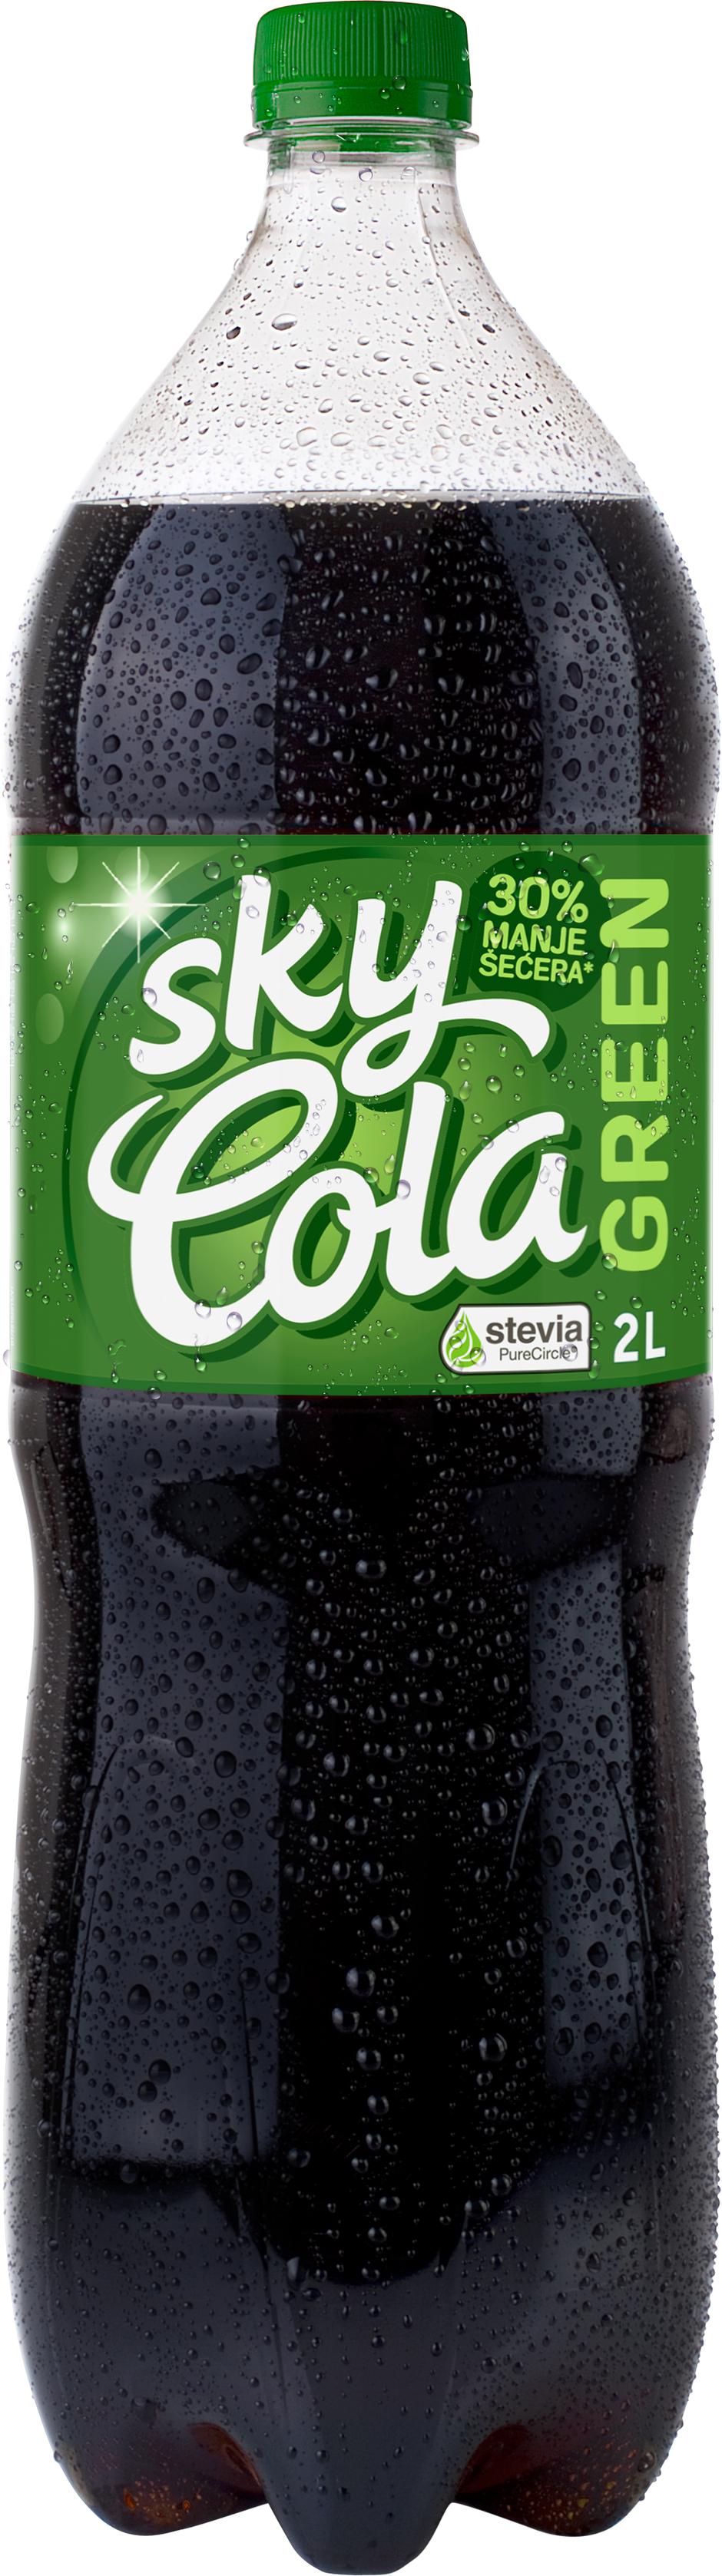 Sky Cola Green